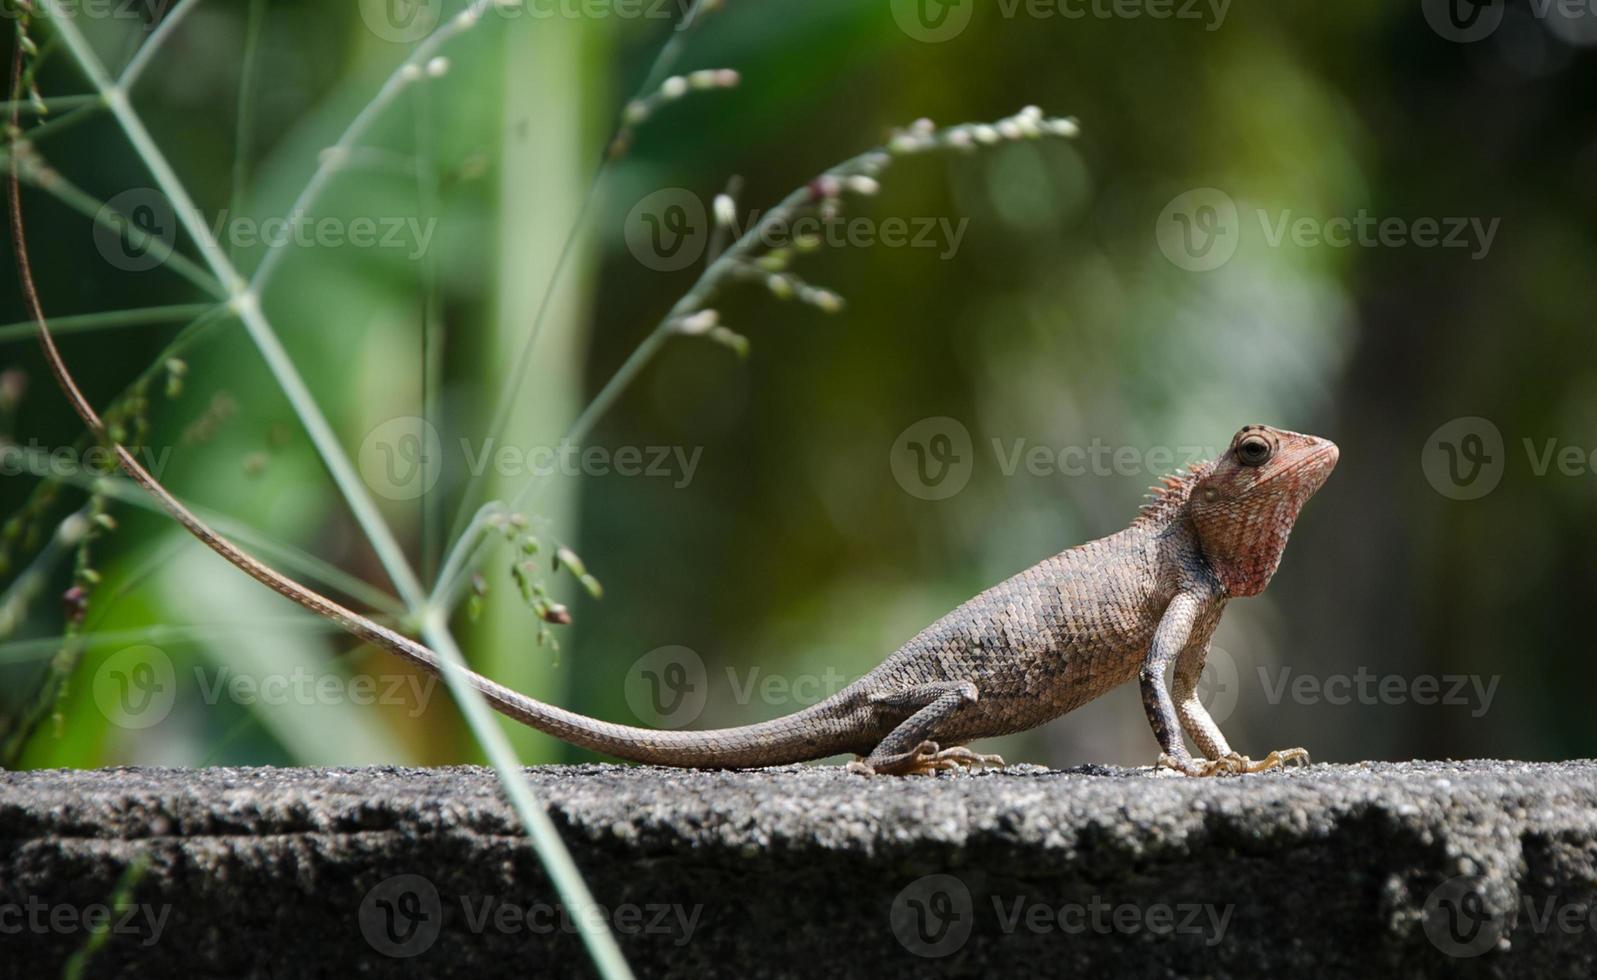 Little Dragon. Lizard in nature, photo